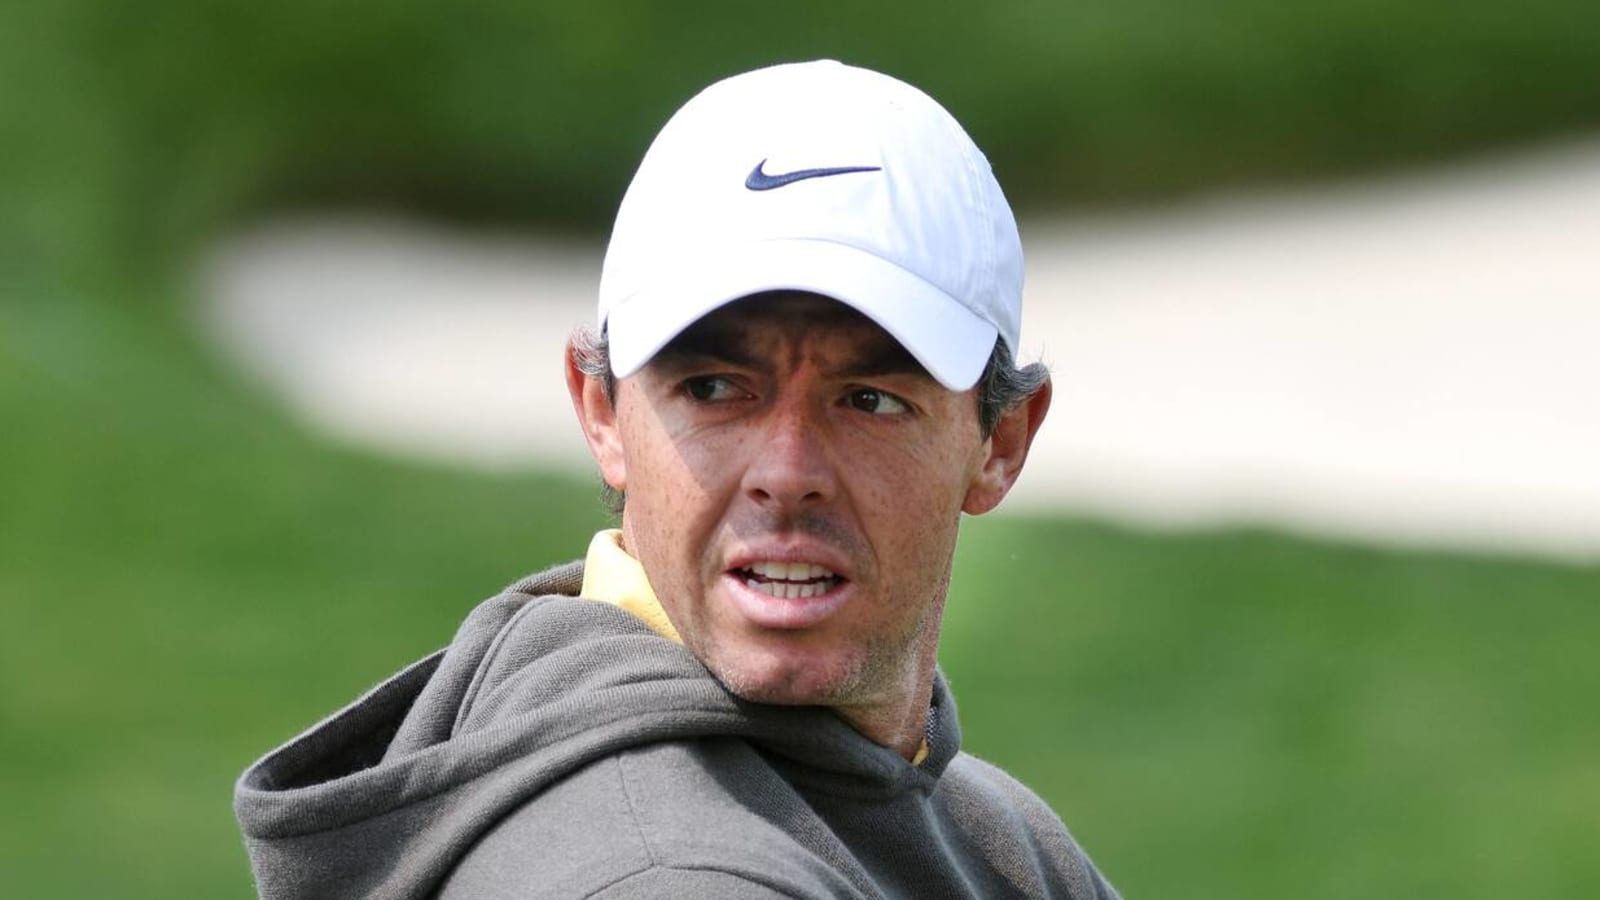 NFL QB endorses Rory McIlroy at PGA Championship